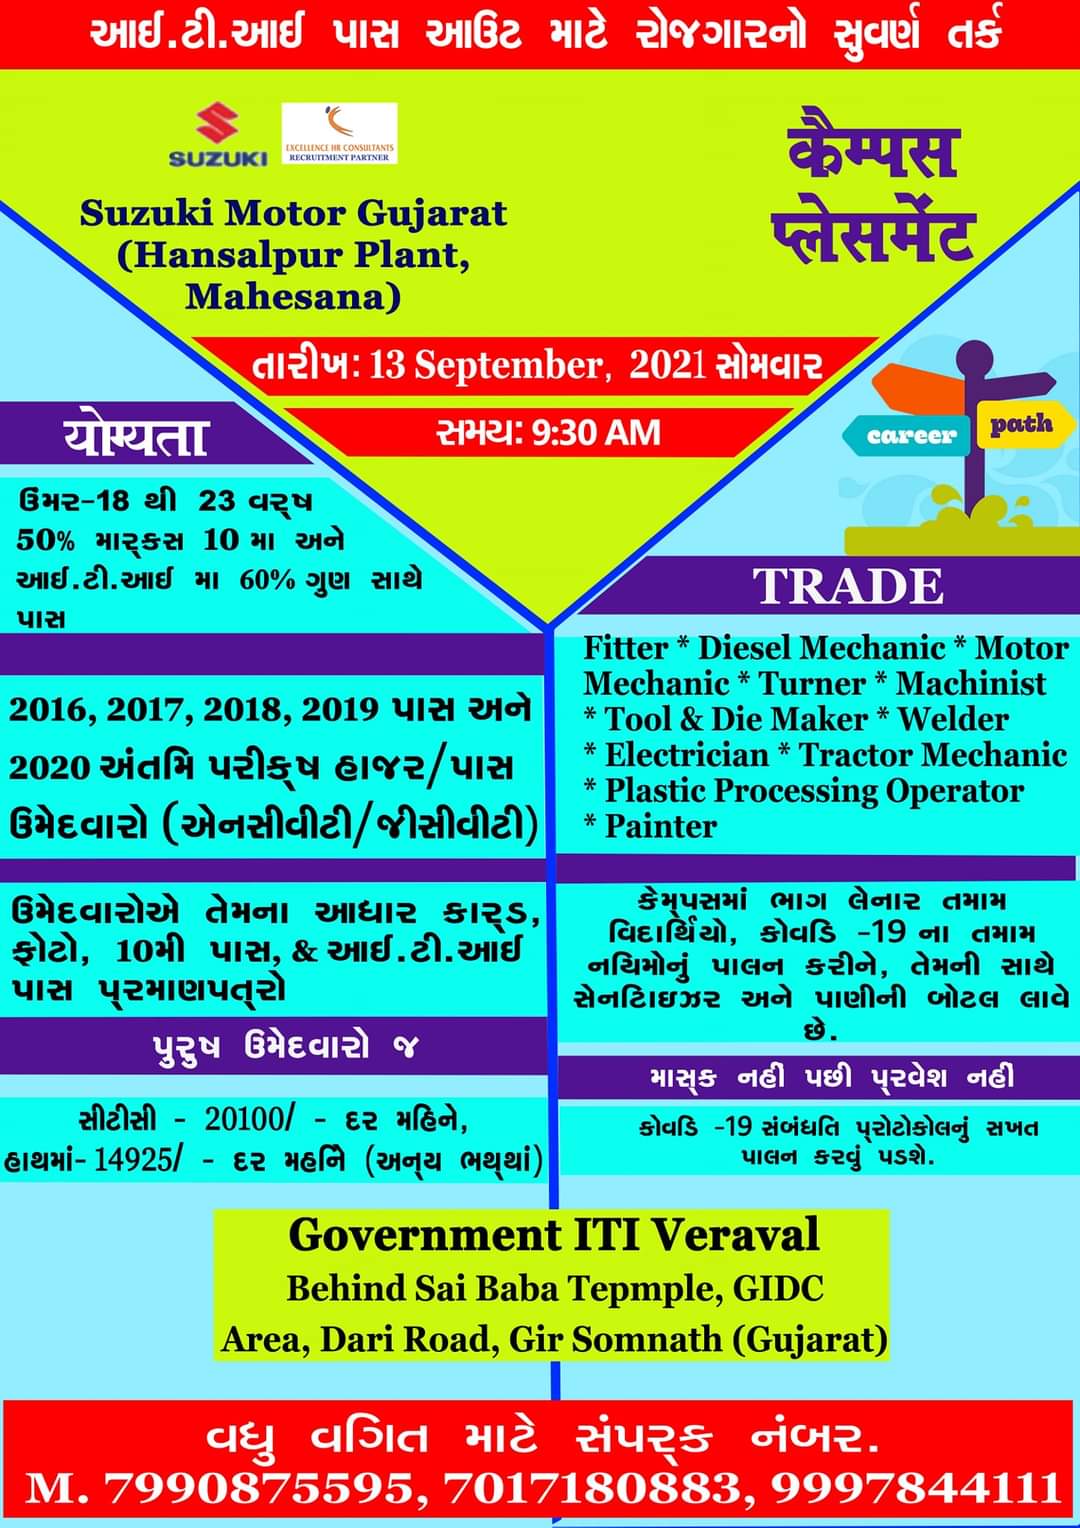 ITI Campus Recruitment On 13th & 14th September 2021 at Govt ITI Veraval, Somnath and Govt ITI Junagadh, Gujarat For Suzuki Motors